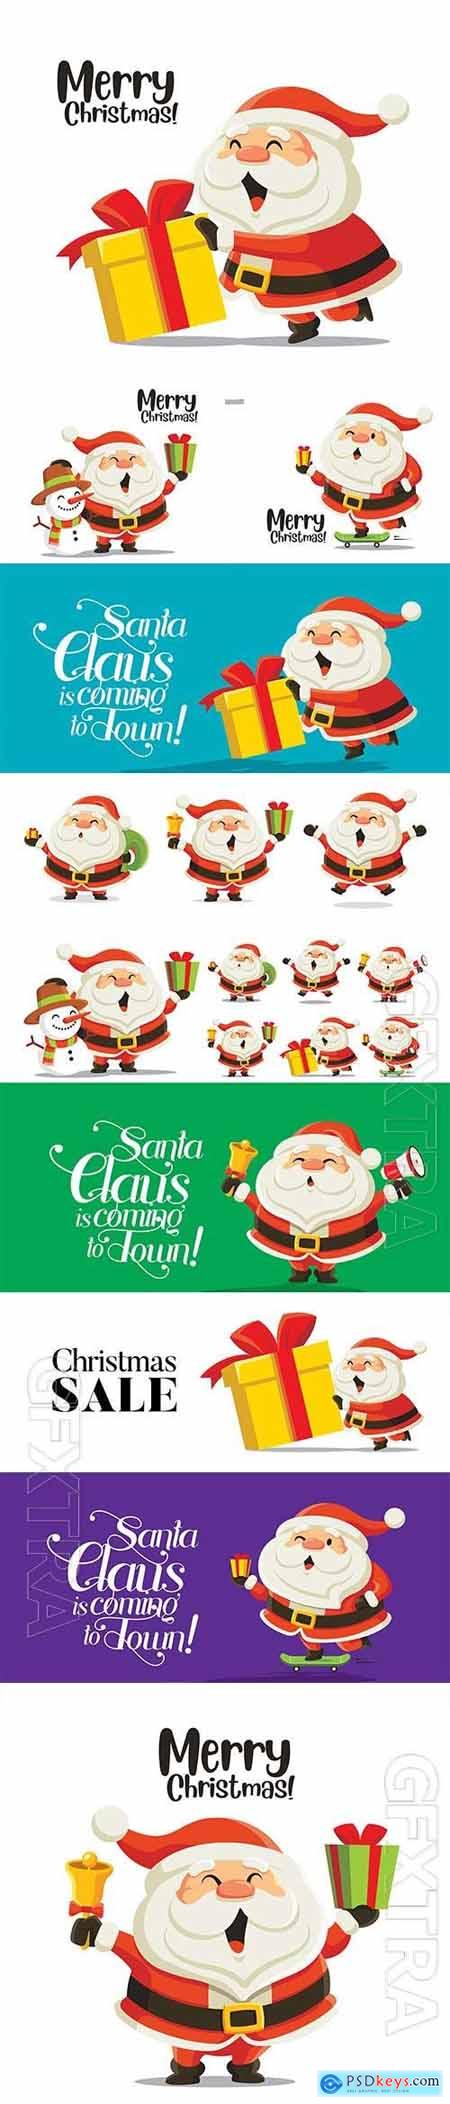 Merry christmas greeting with cartoon cute santa claus pushing big christmas present premium vector